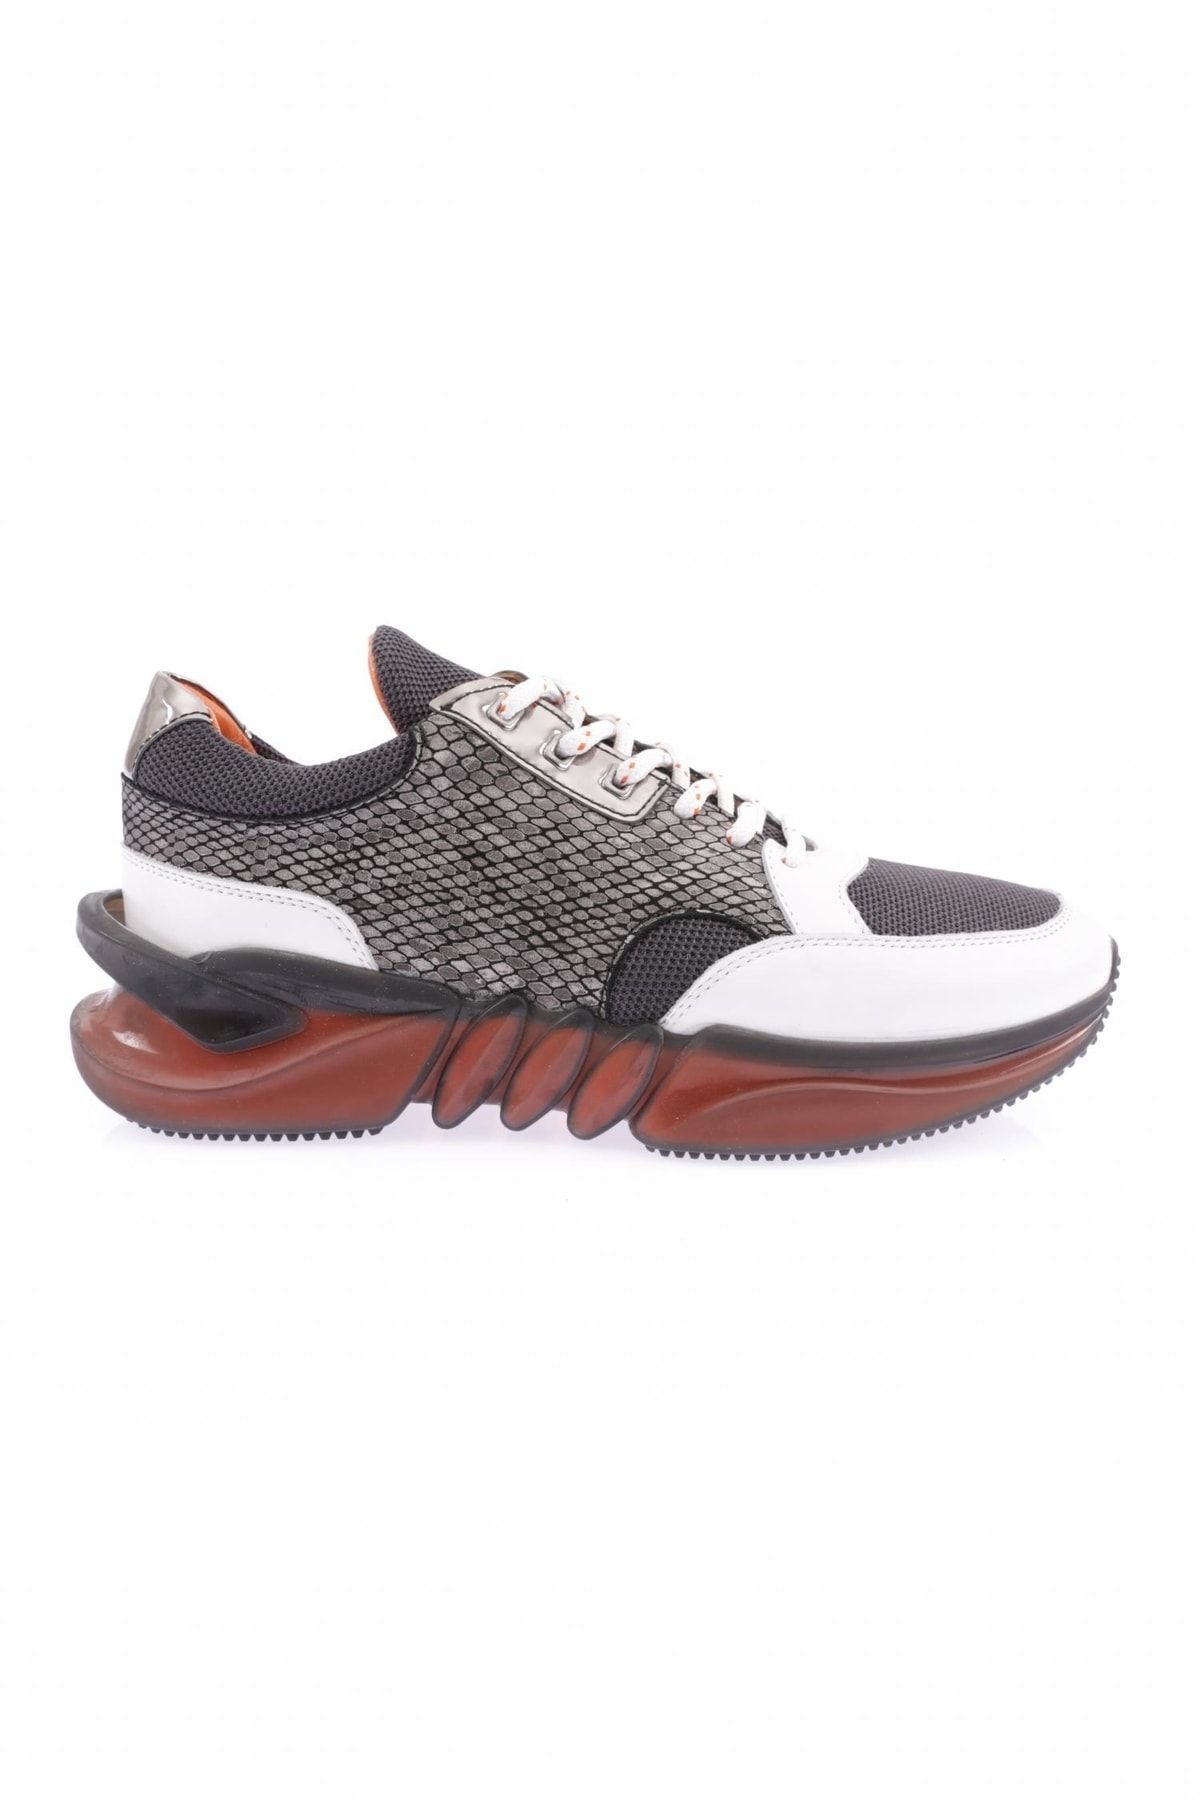 Pierre Cardin Beyaz - Dgn 22y-alfa703 Erkek Sneakers Ayakkabı